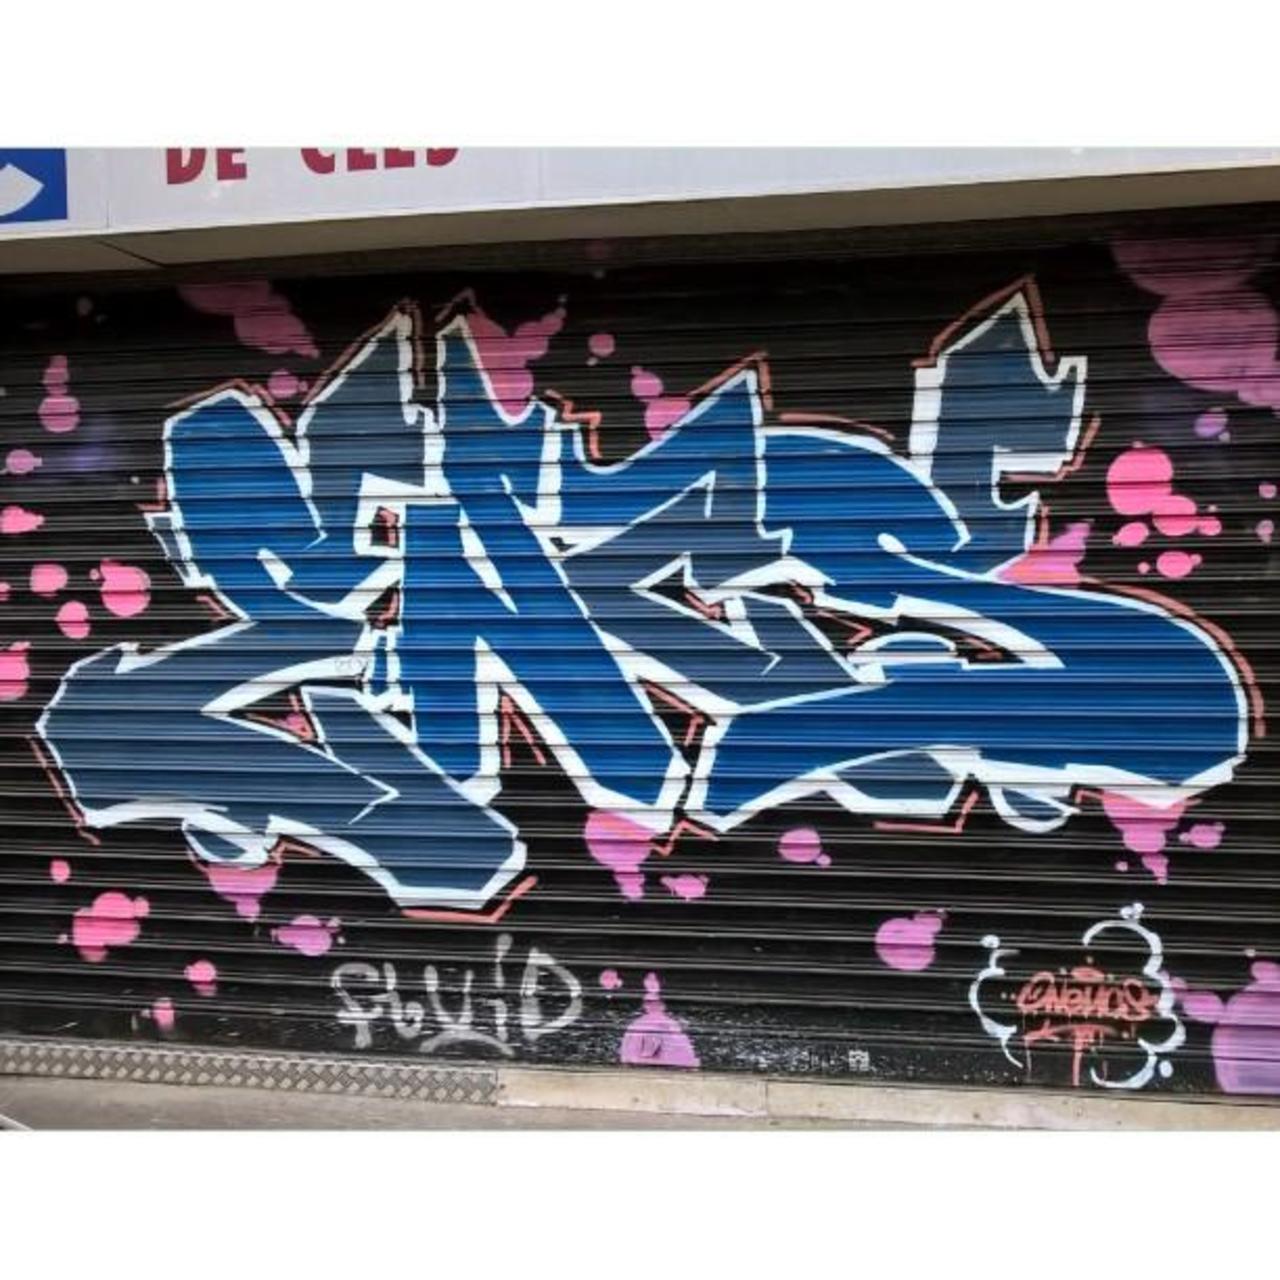 #Paris #graffiti photo by @maxdimontemarciano http://ift.tt/1MEPSpV #StreetArt http://t.co/2iOgtVHx7m